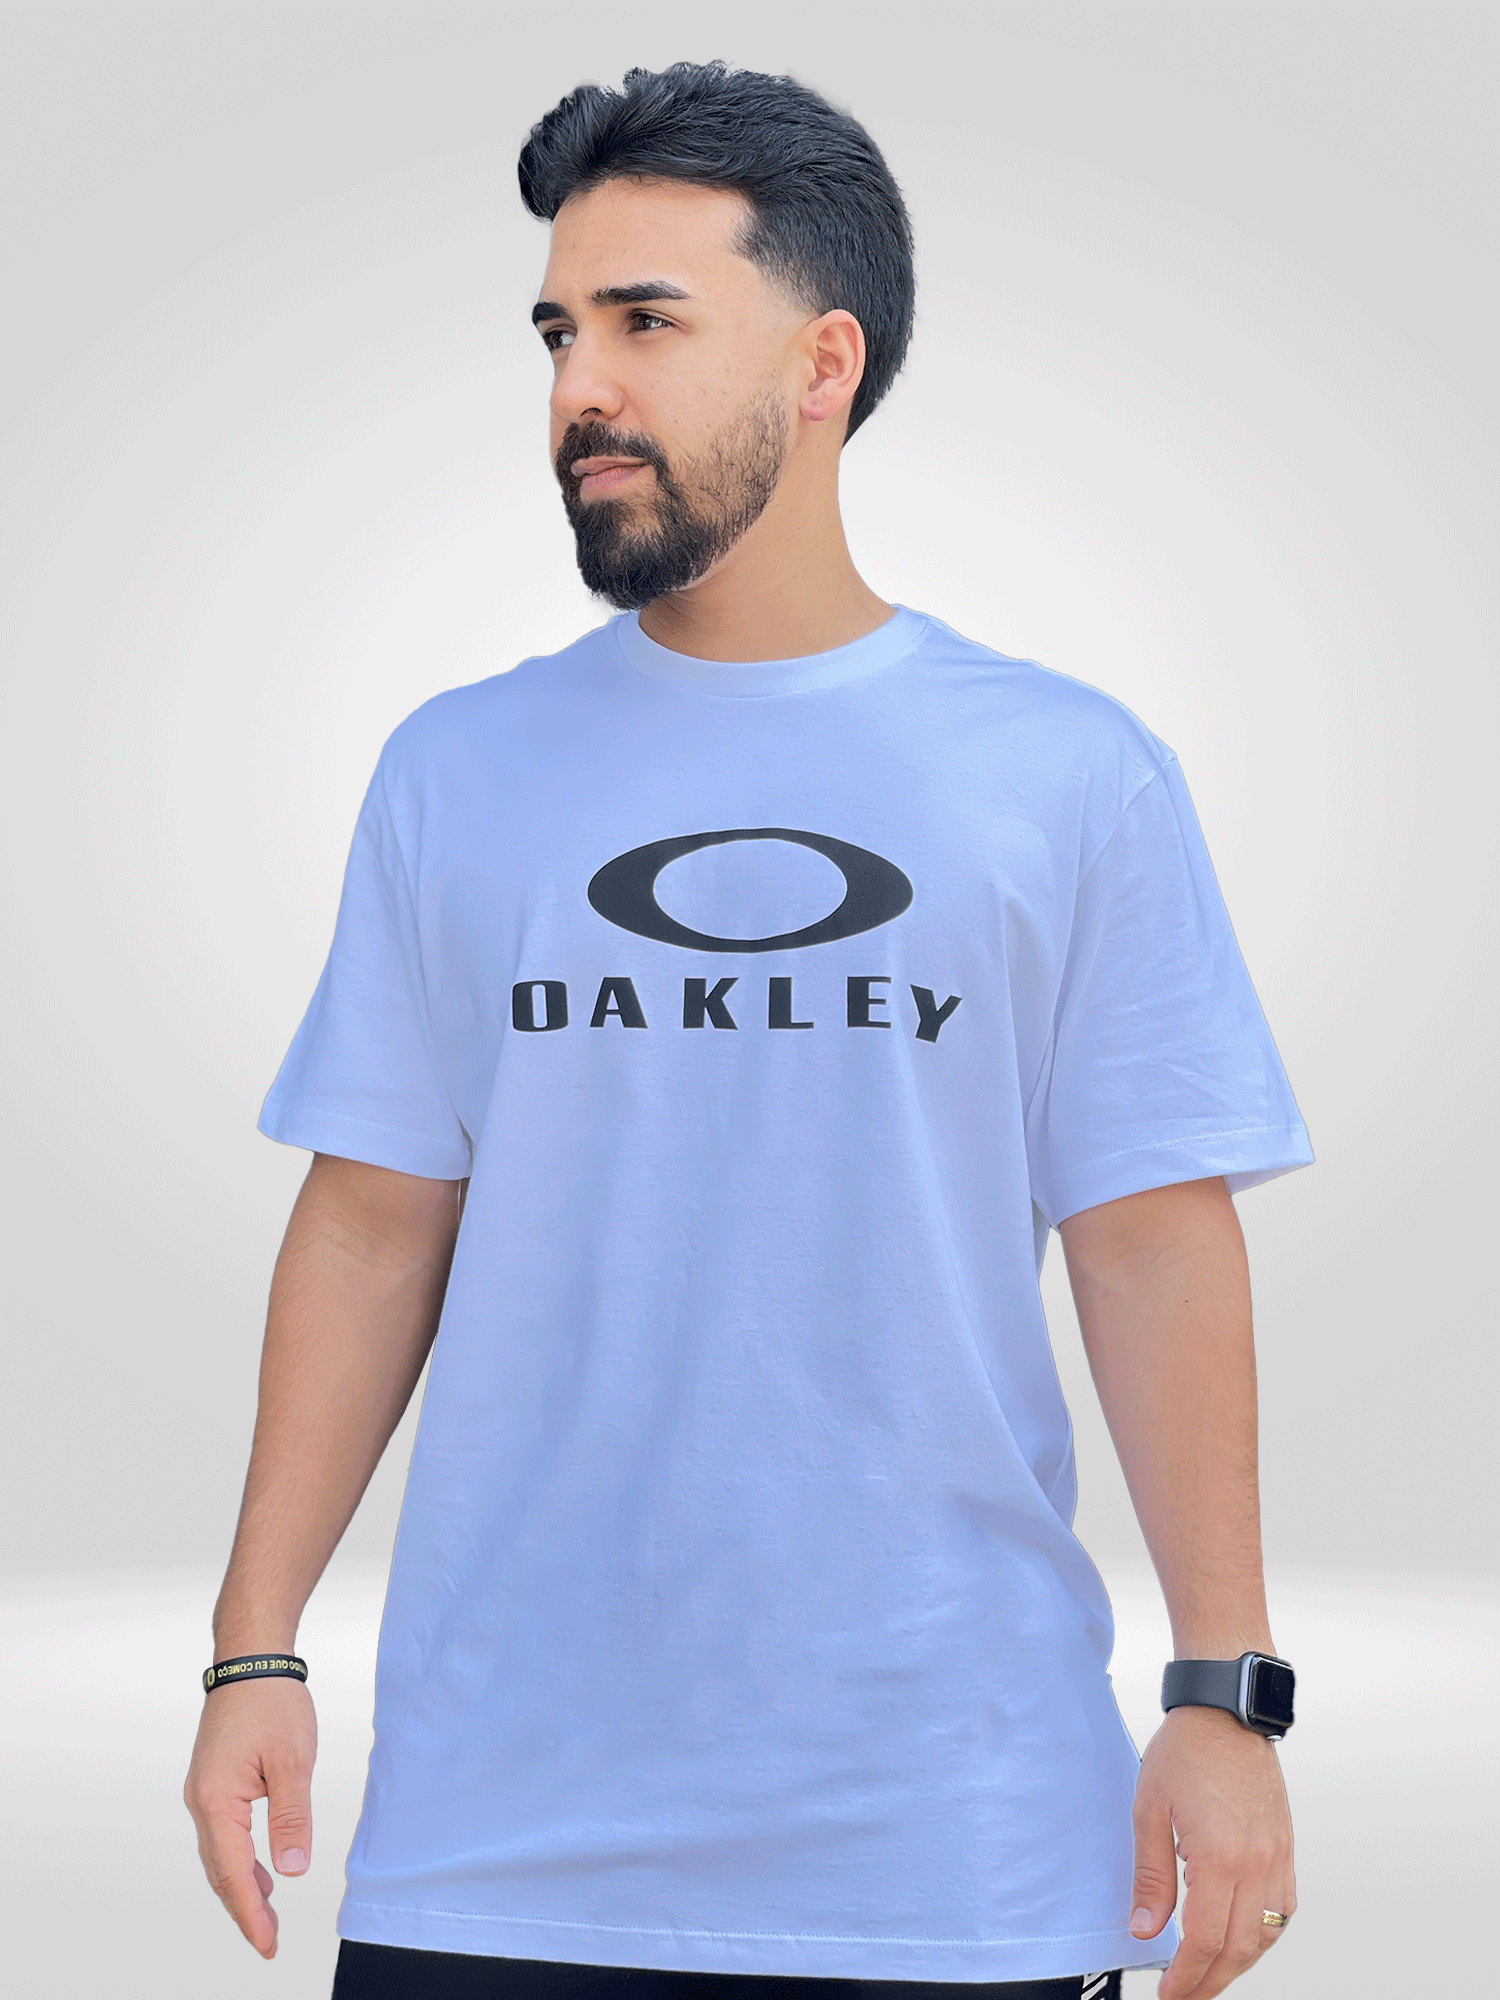 Camiseta Oakley Tee Branca Logo Preto